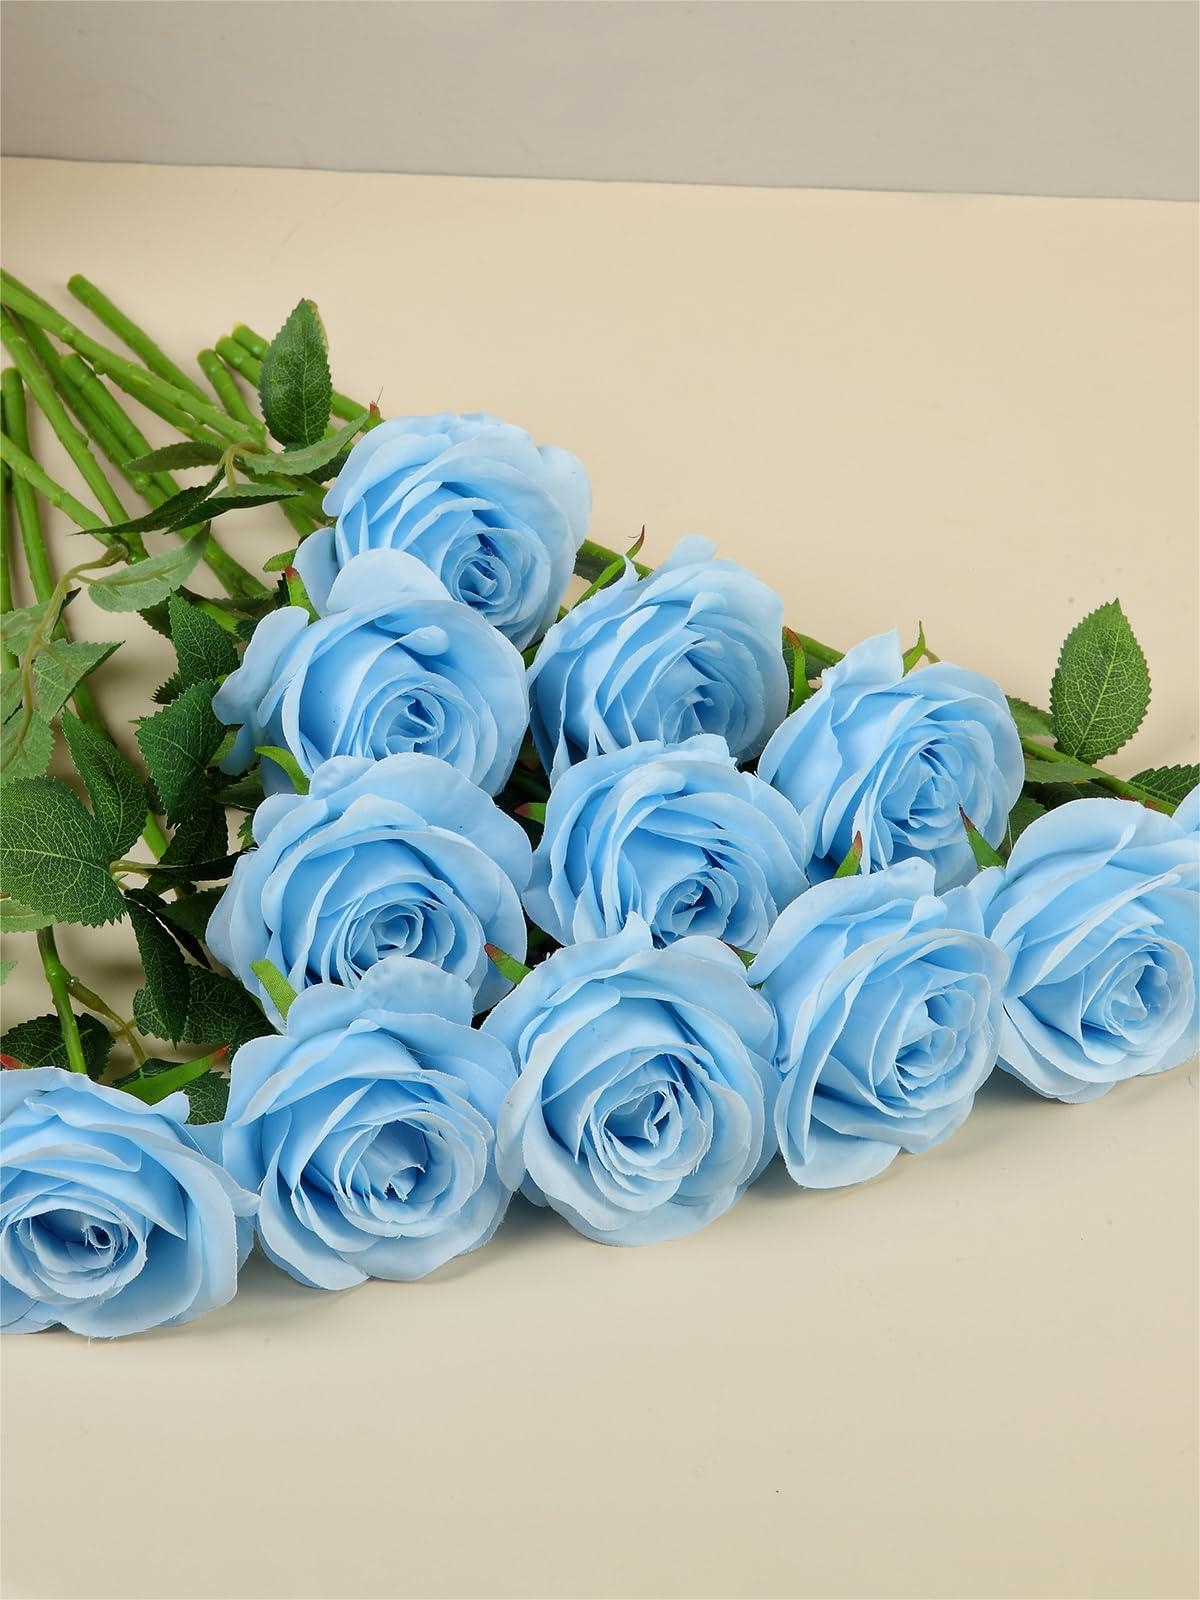 Light Blue Artificial Rose Flowers With Long Stems Wedding Bouquet Centerpieces Decorations HH8026